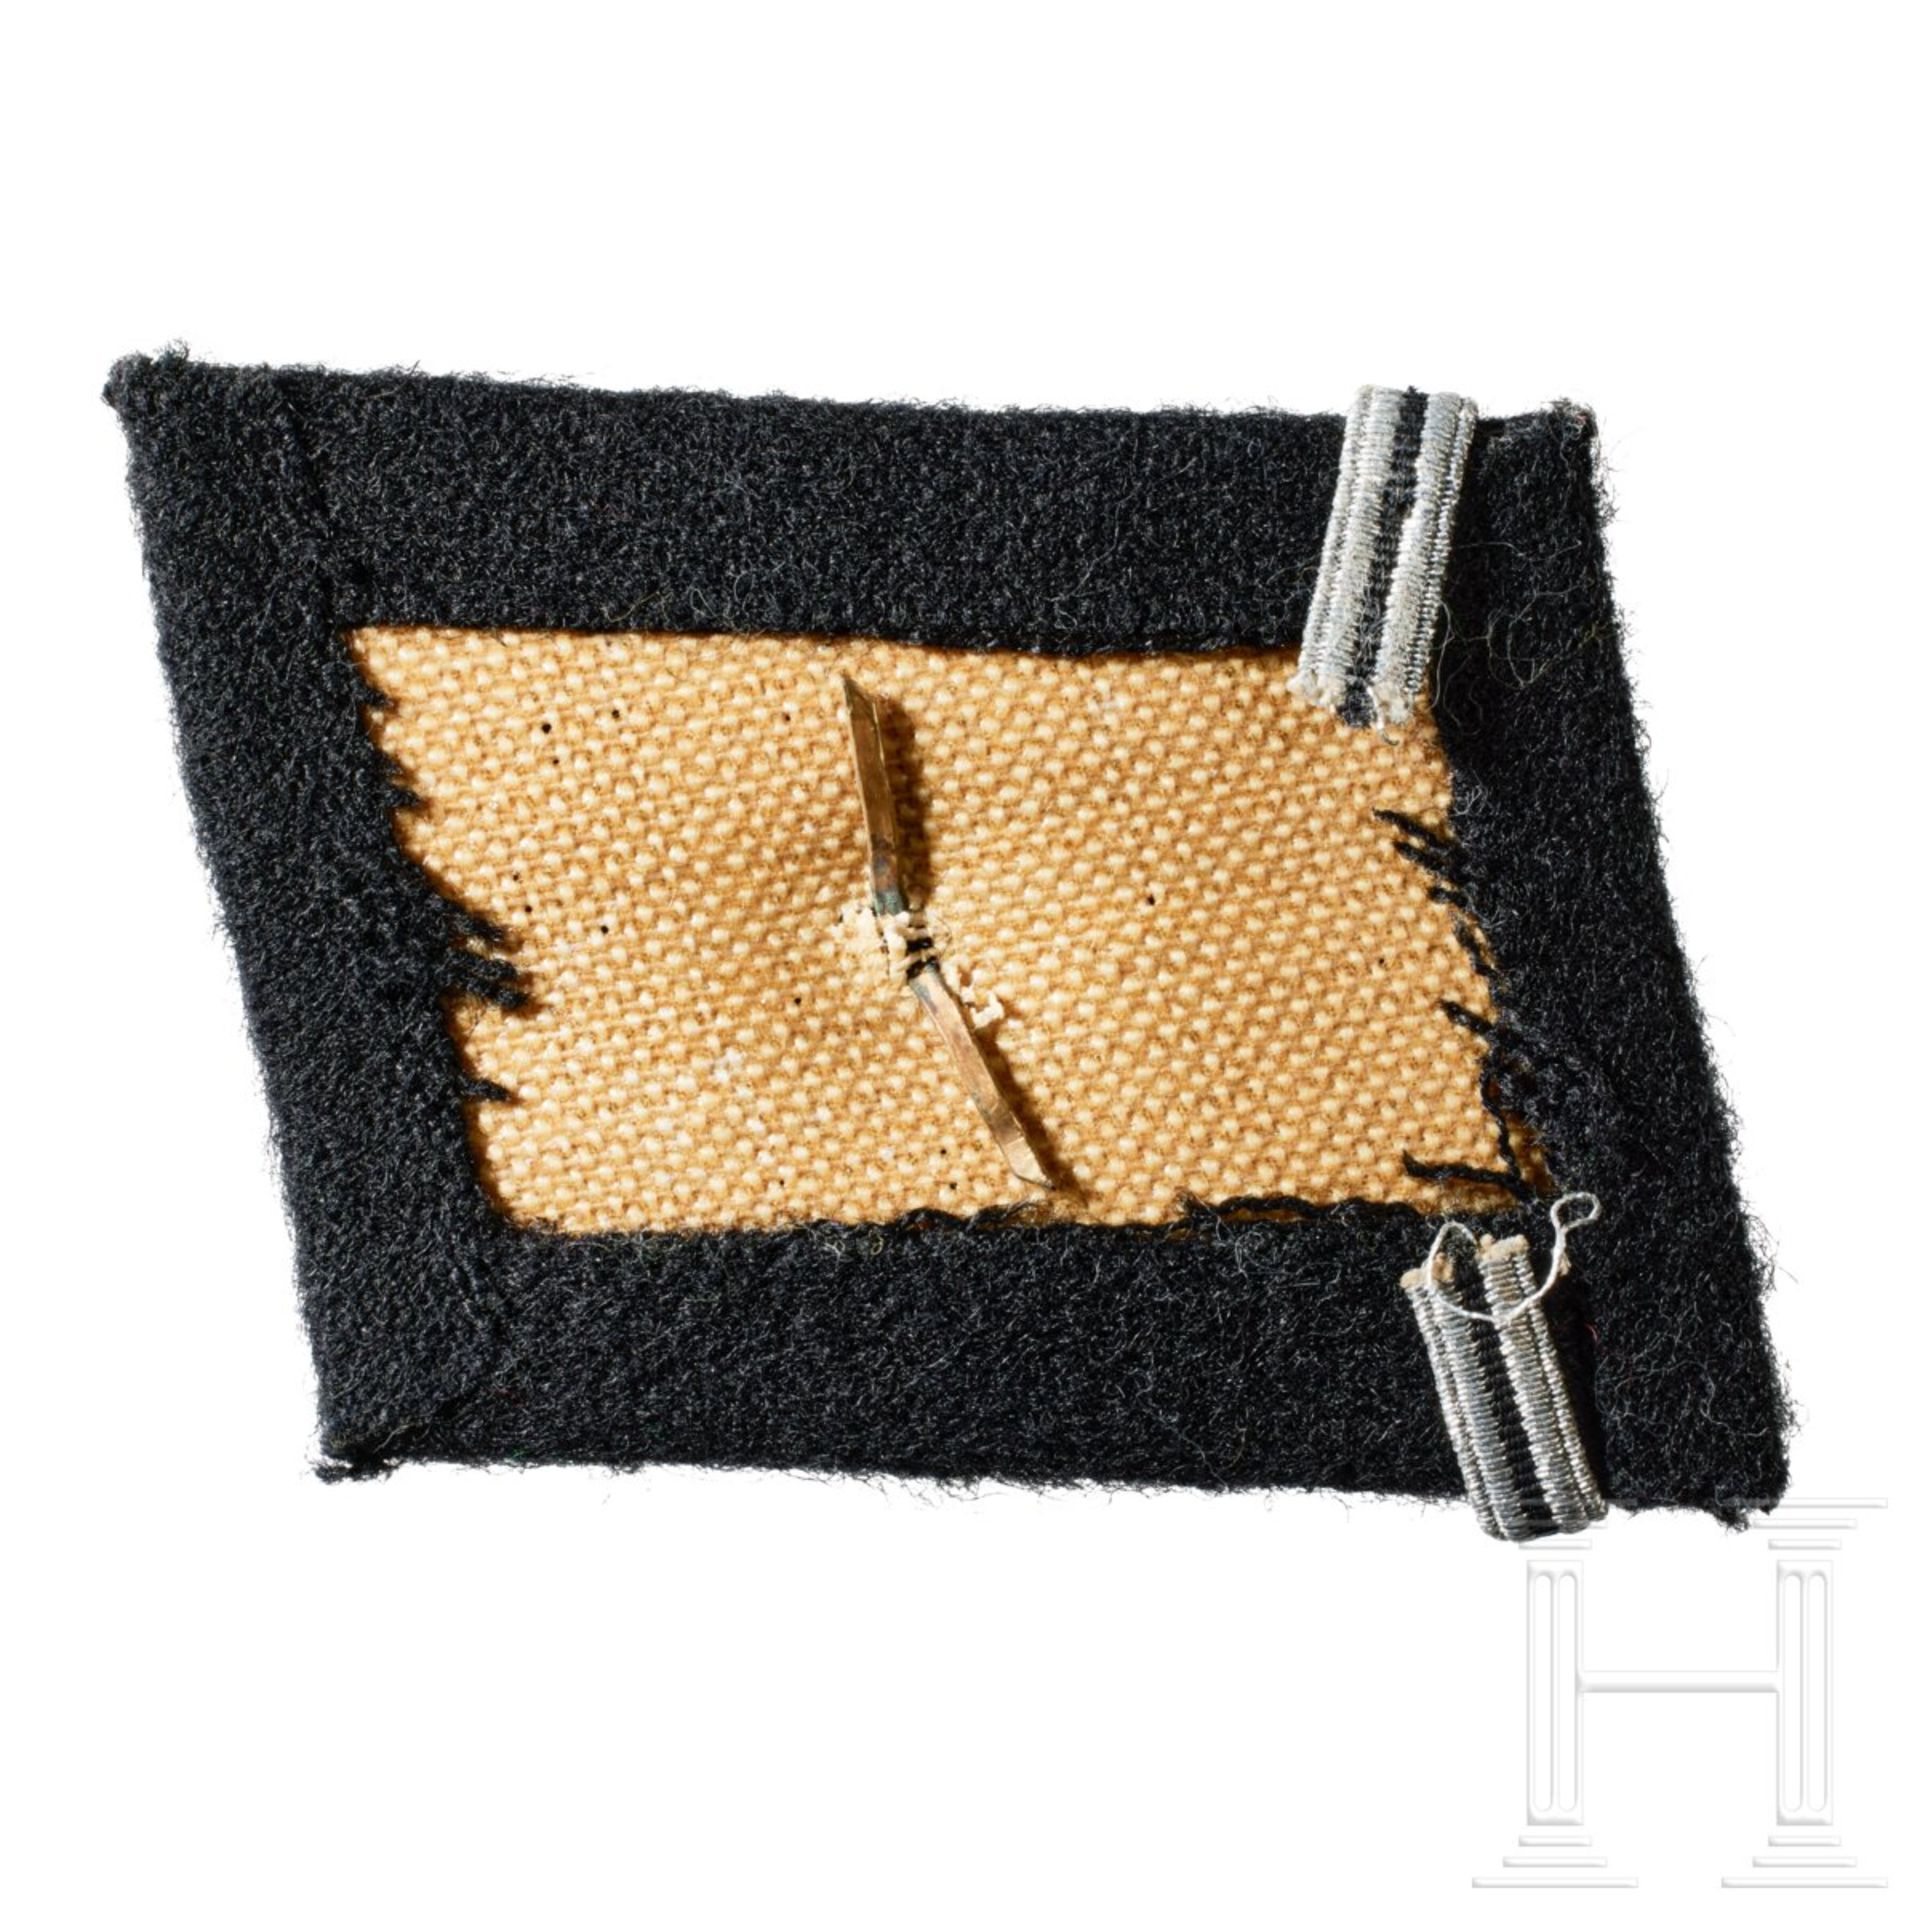 A Left Collar Tab for SS-Scharführer - Image 2 of 2